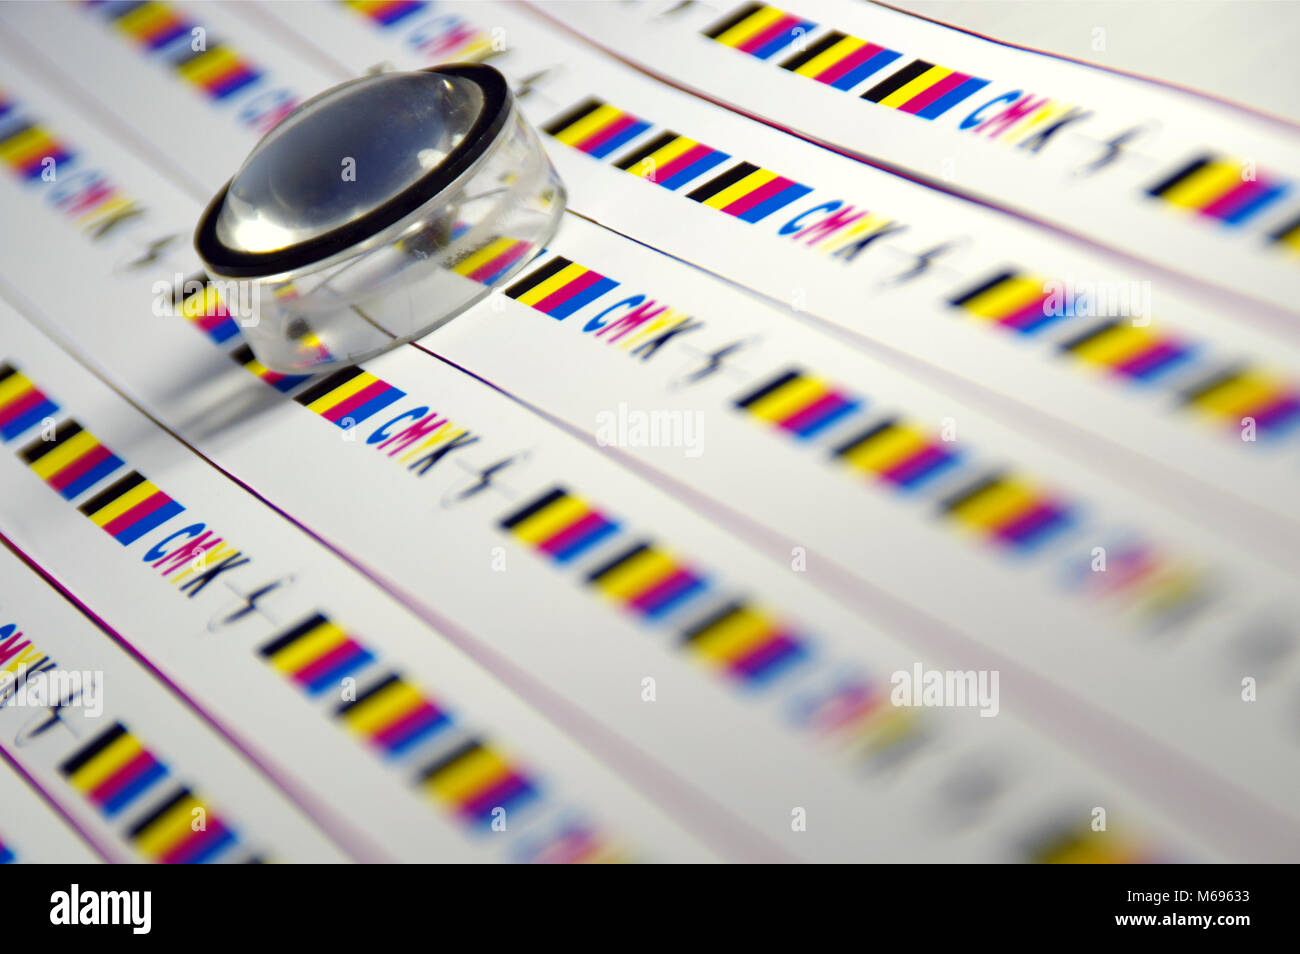 Magnifier on plotter test printout. Checking cmyk print quality. Stock Photo